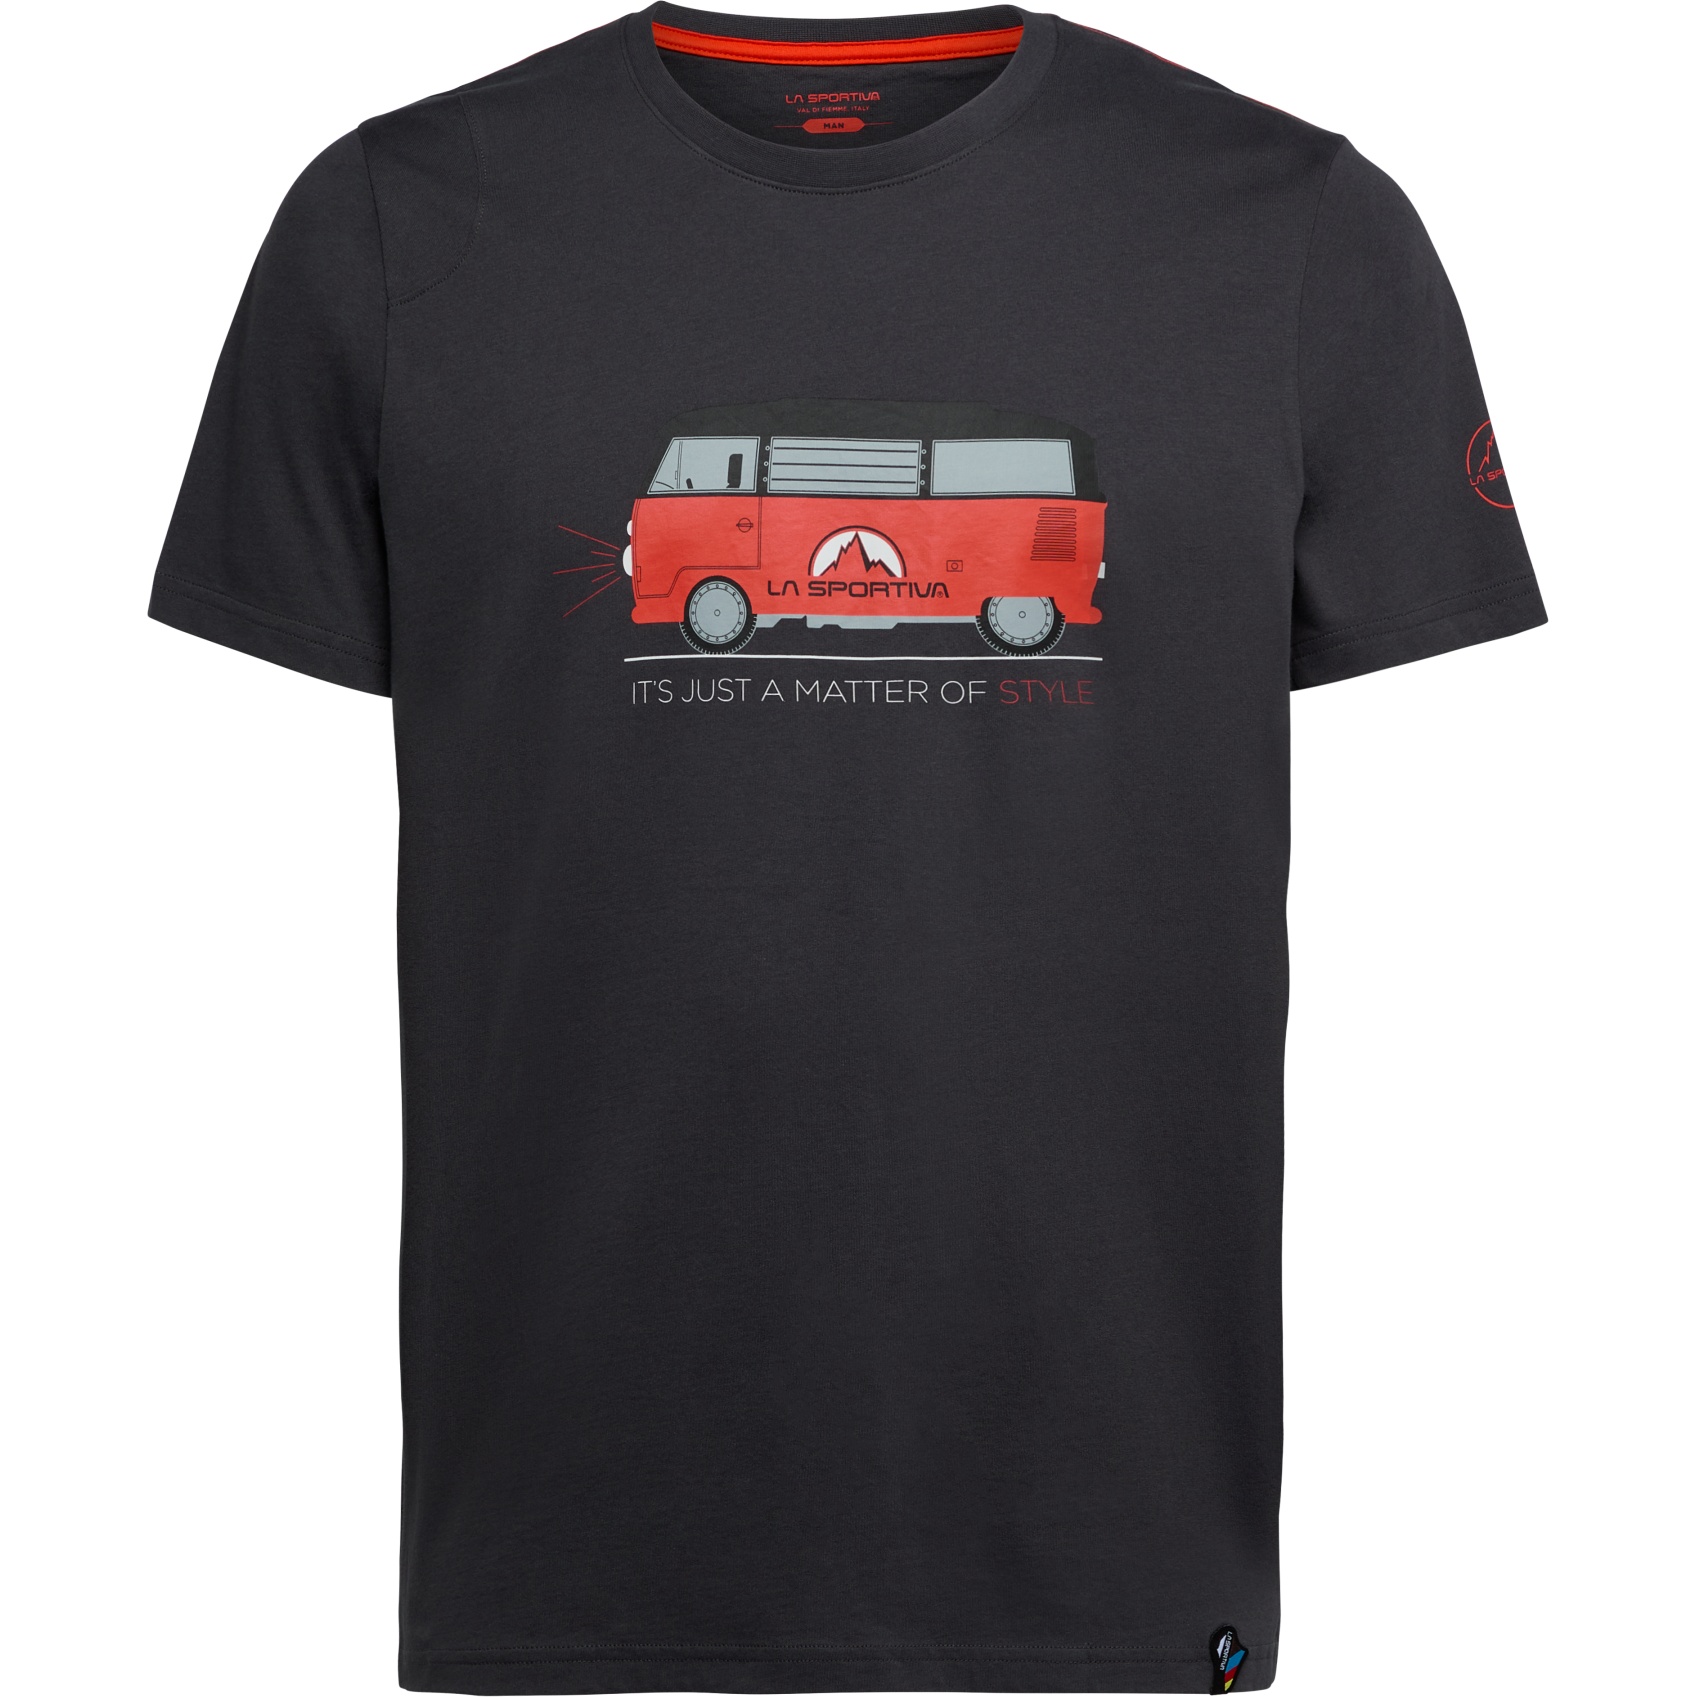 Picture of La Sportiva Van T-Shirt Men - Carbon/Cherry Tomato